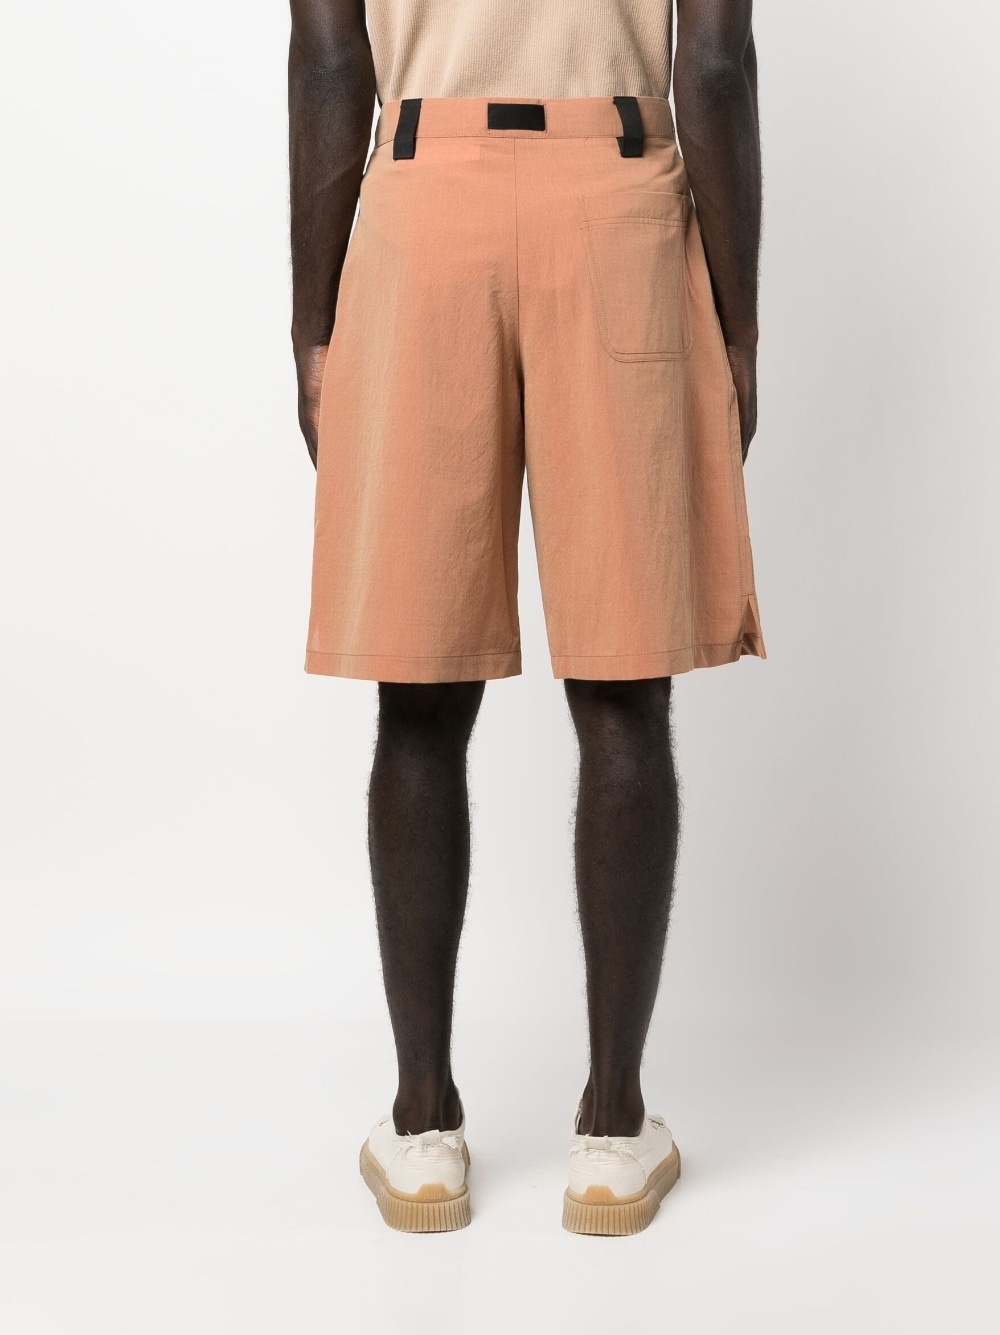 Le short Meio belted shorts - 4